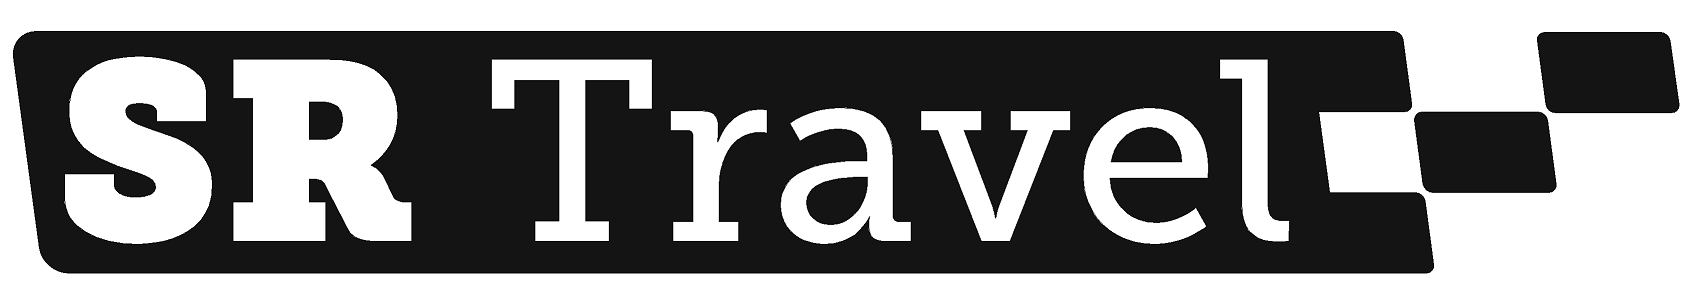 SR travel logo